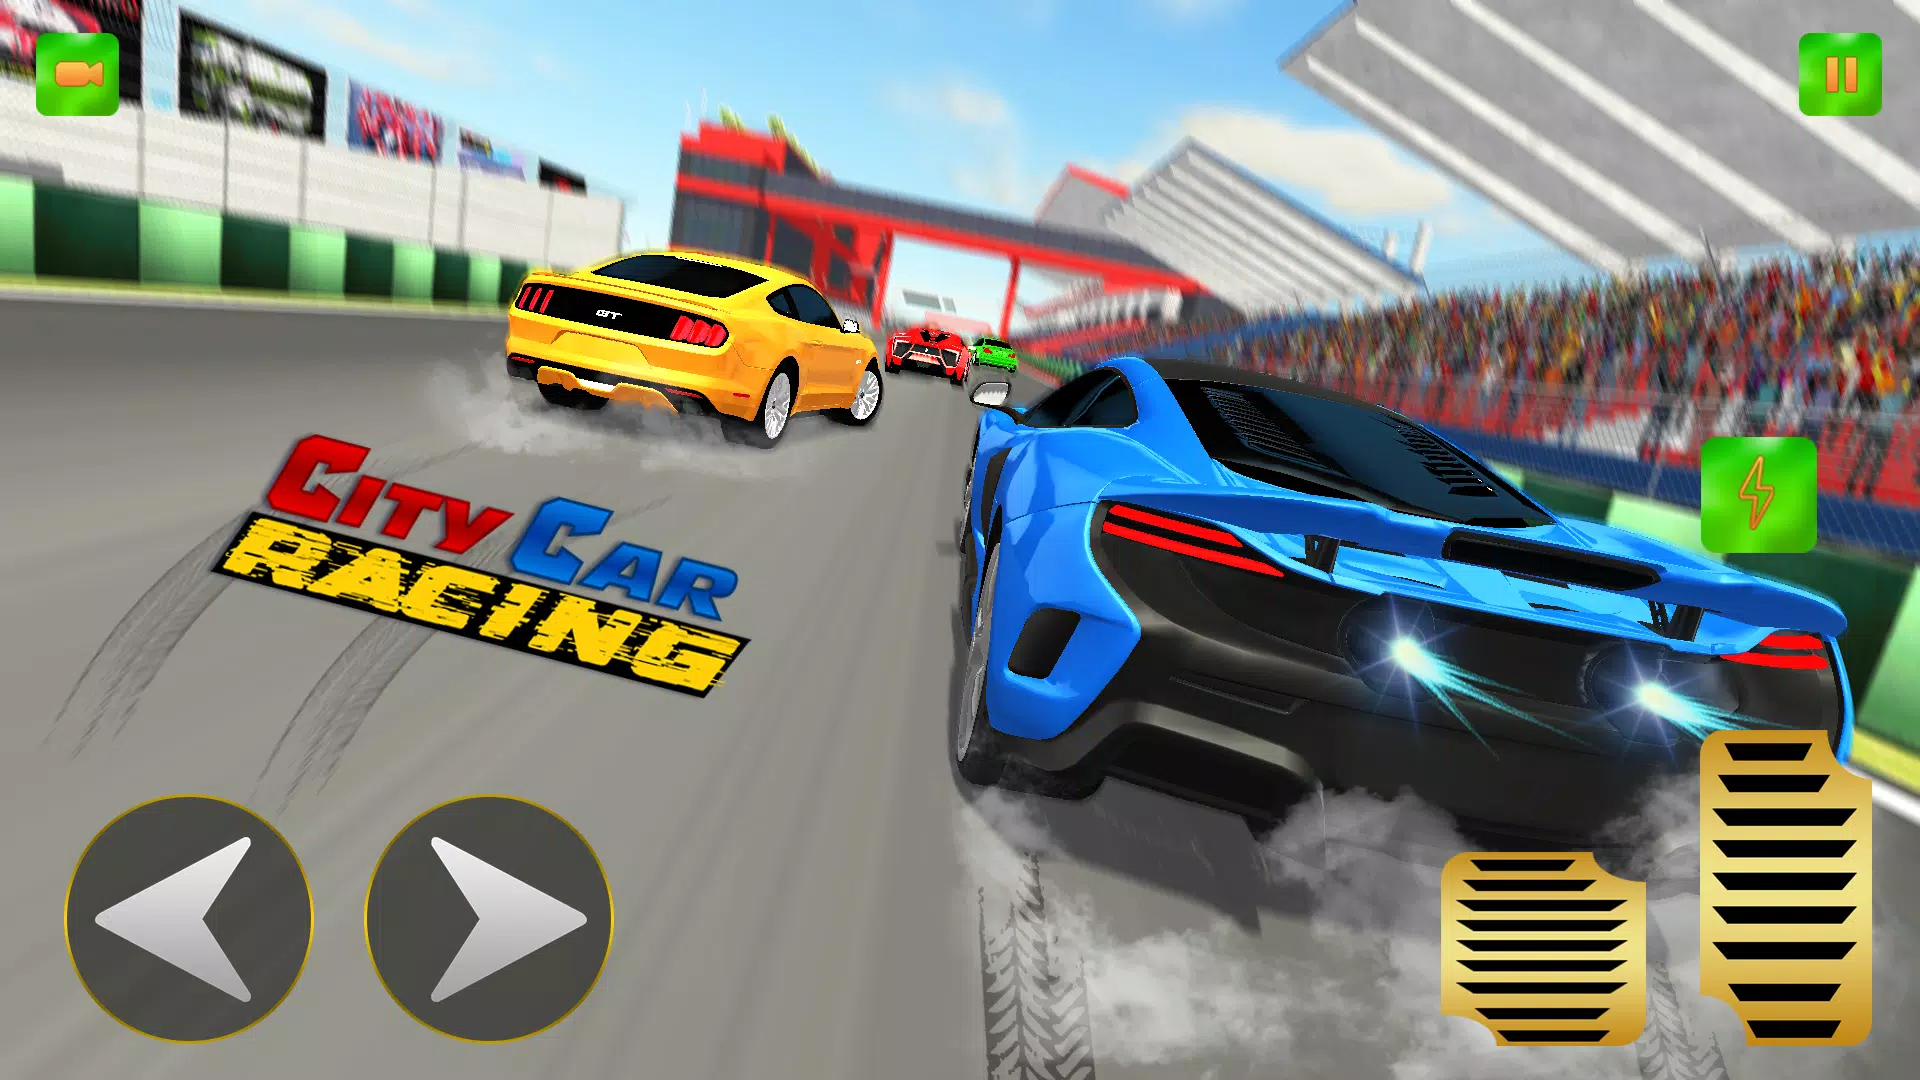 Download do APK de Racing in City para Android